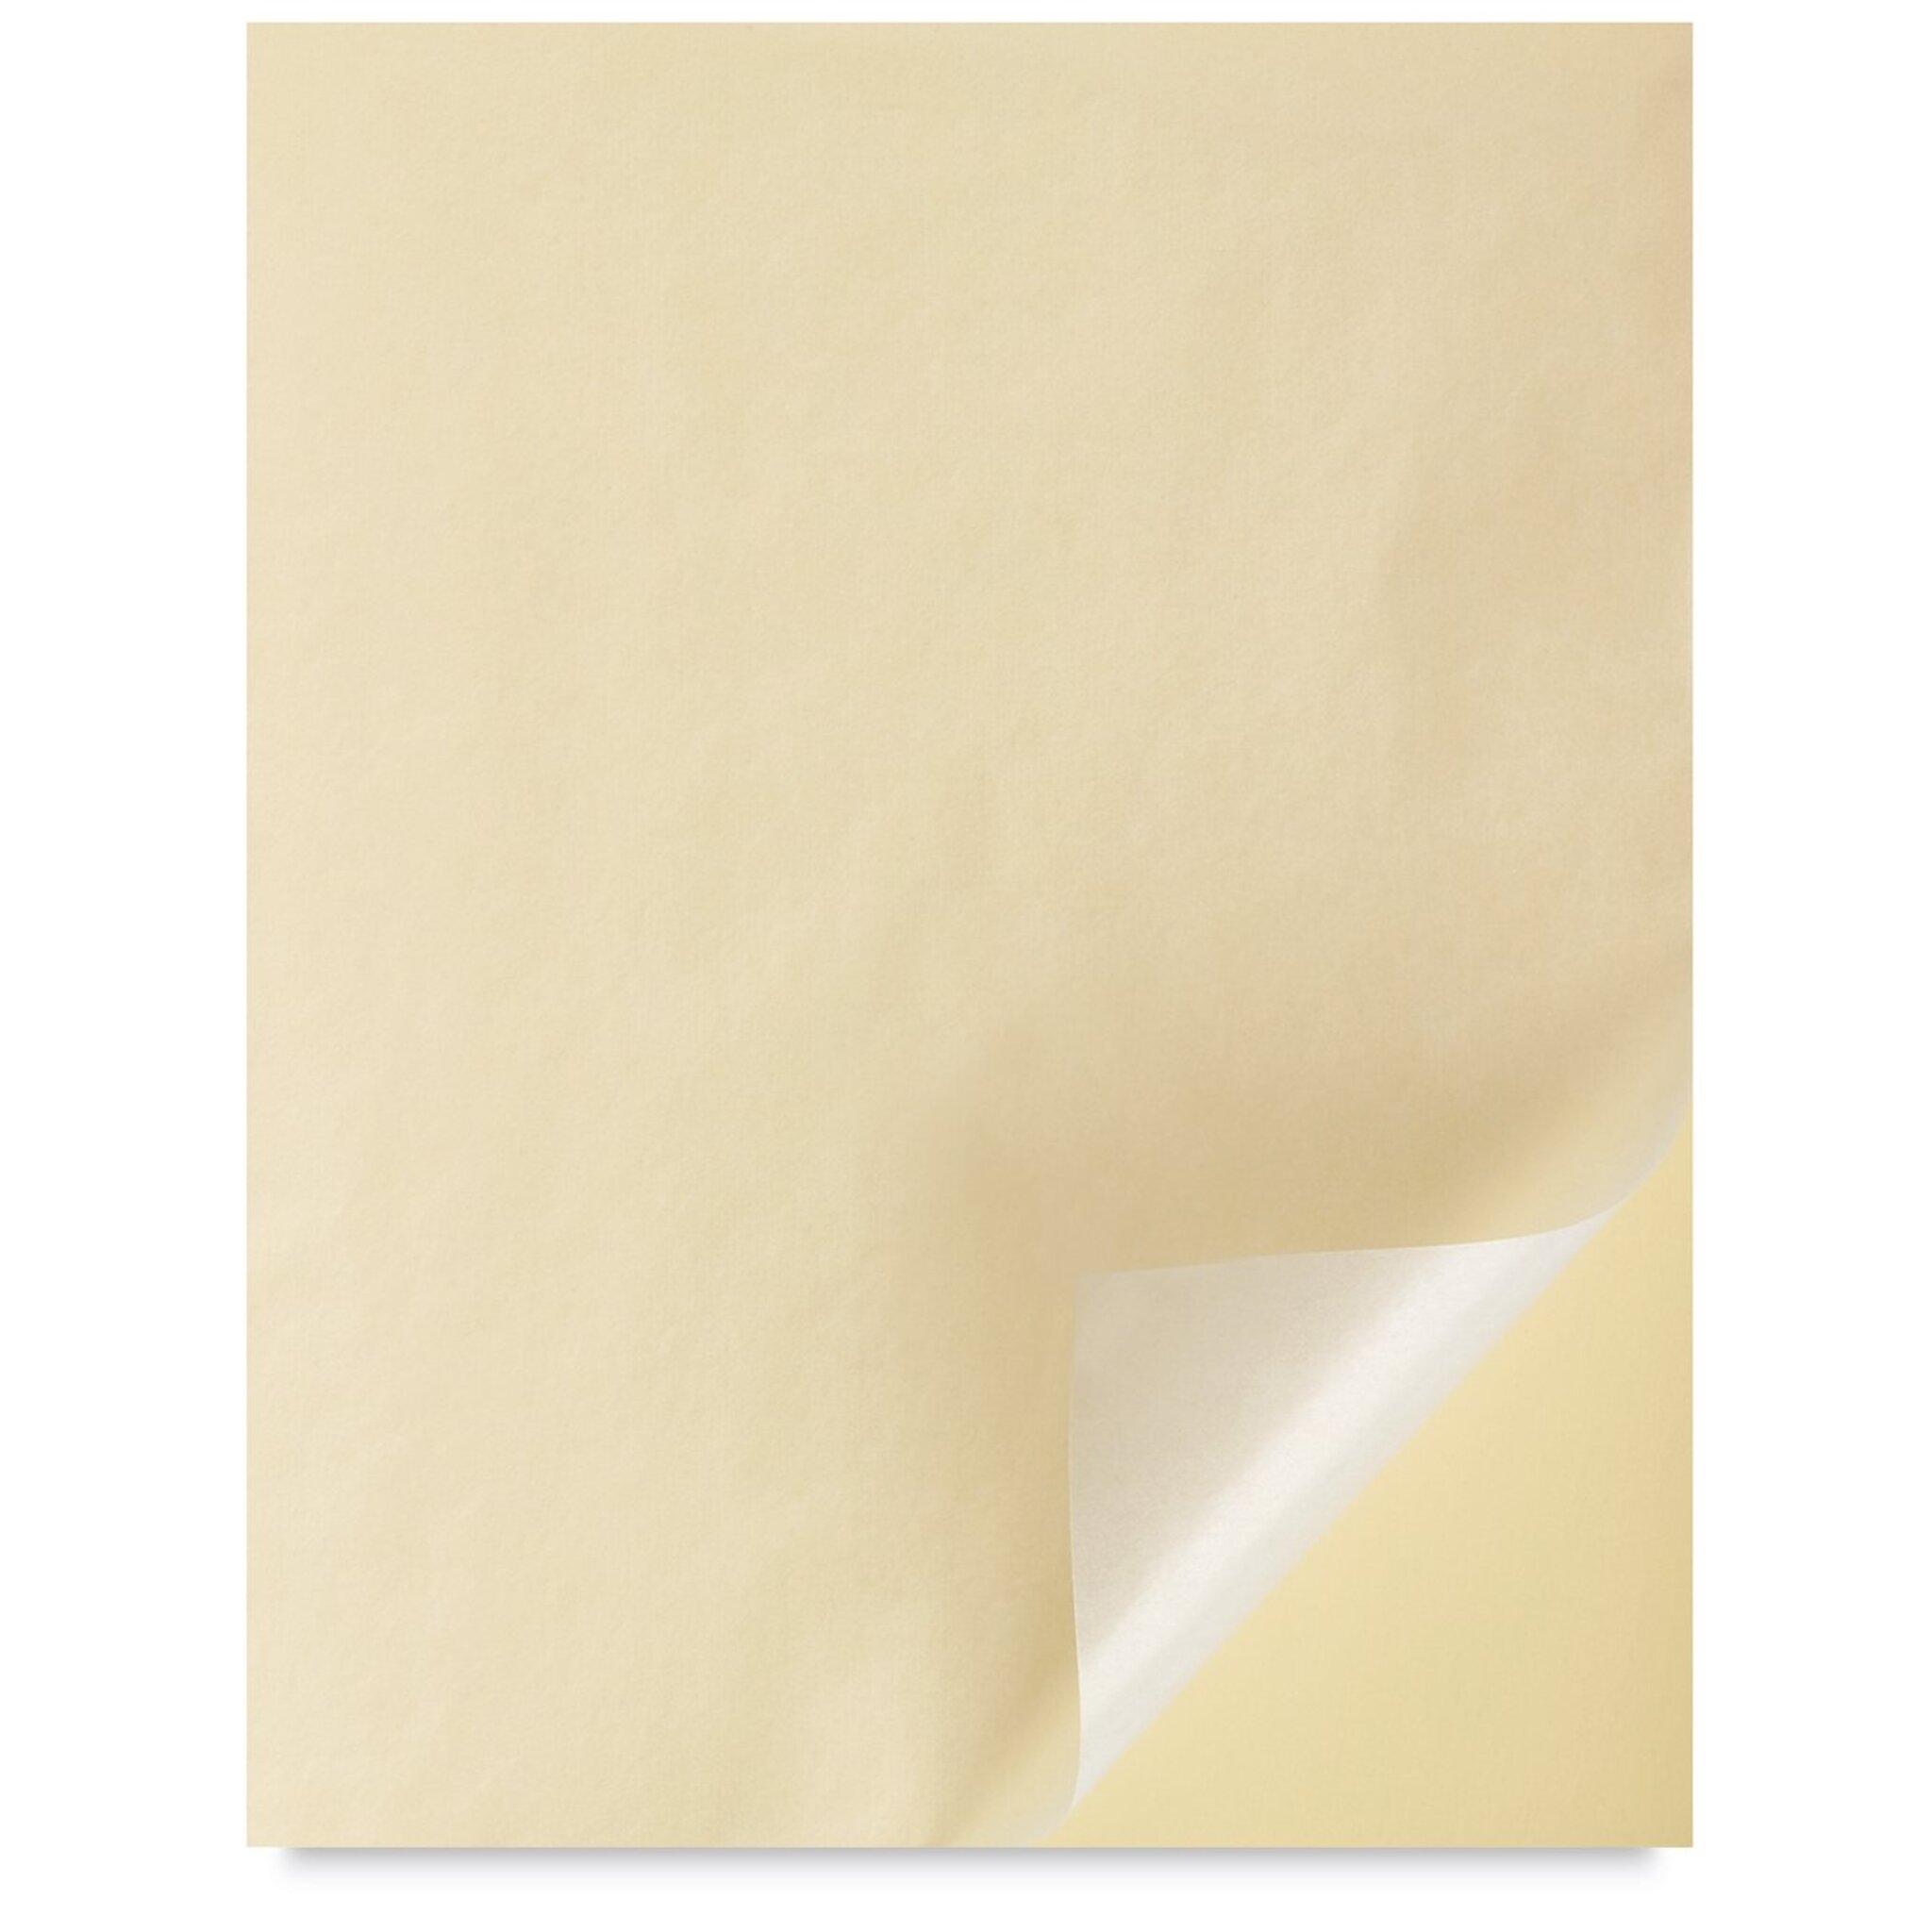 Pastelmat Pad - White, 9-1/2 x 12